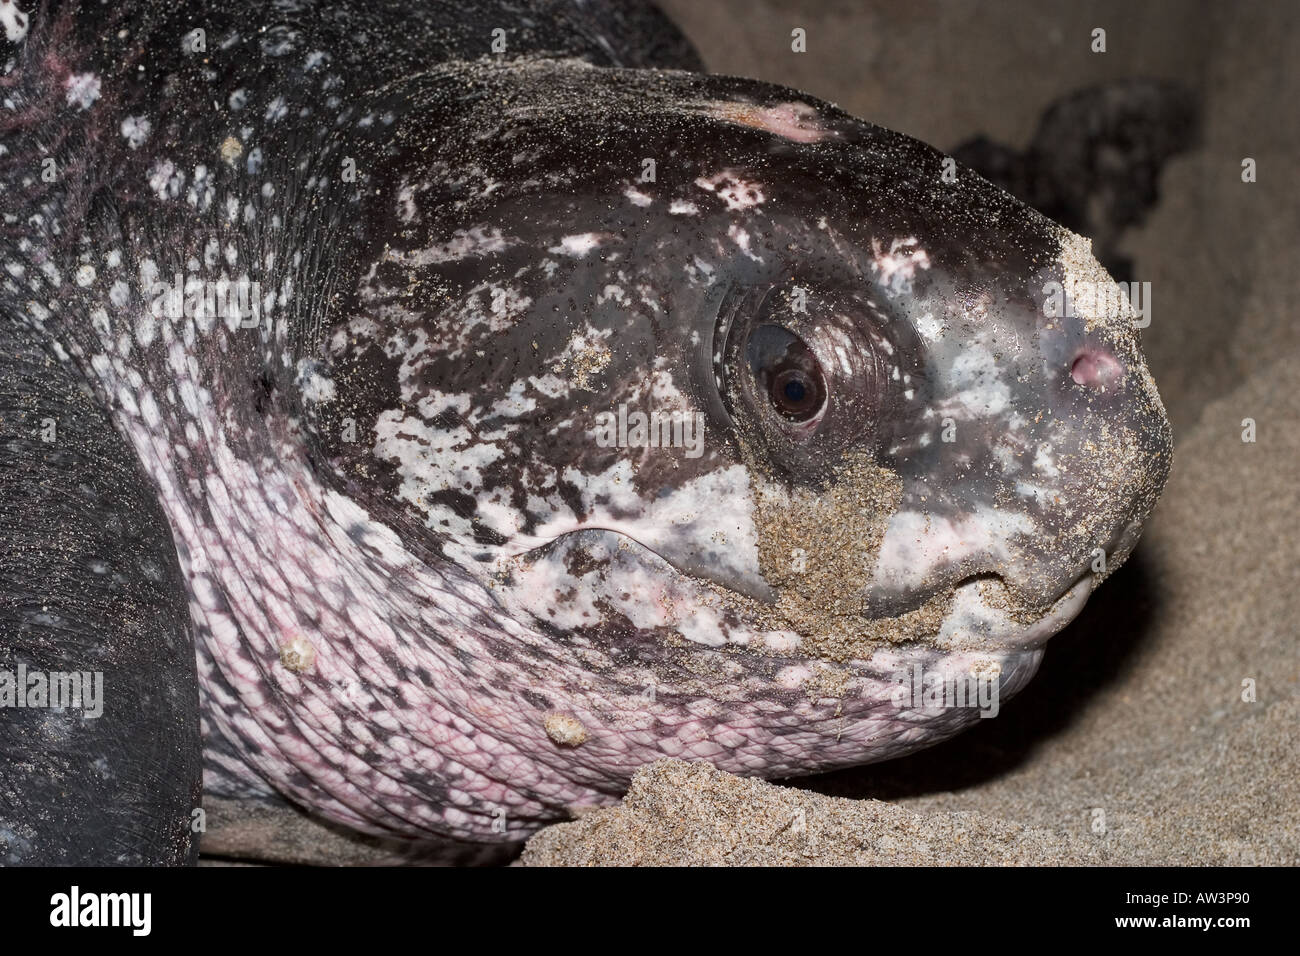 Leatherback sea turtle Dermochelys coriacea close up showing head eye detail, Florida Stock Photo